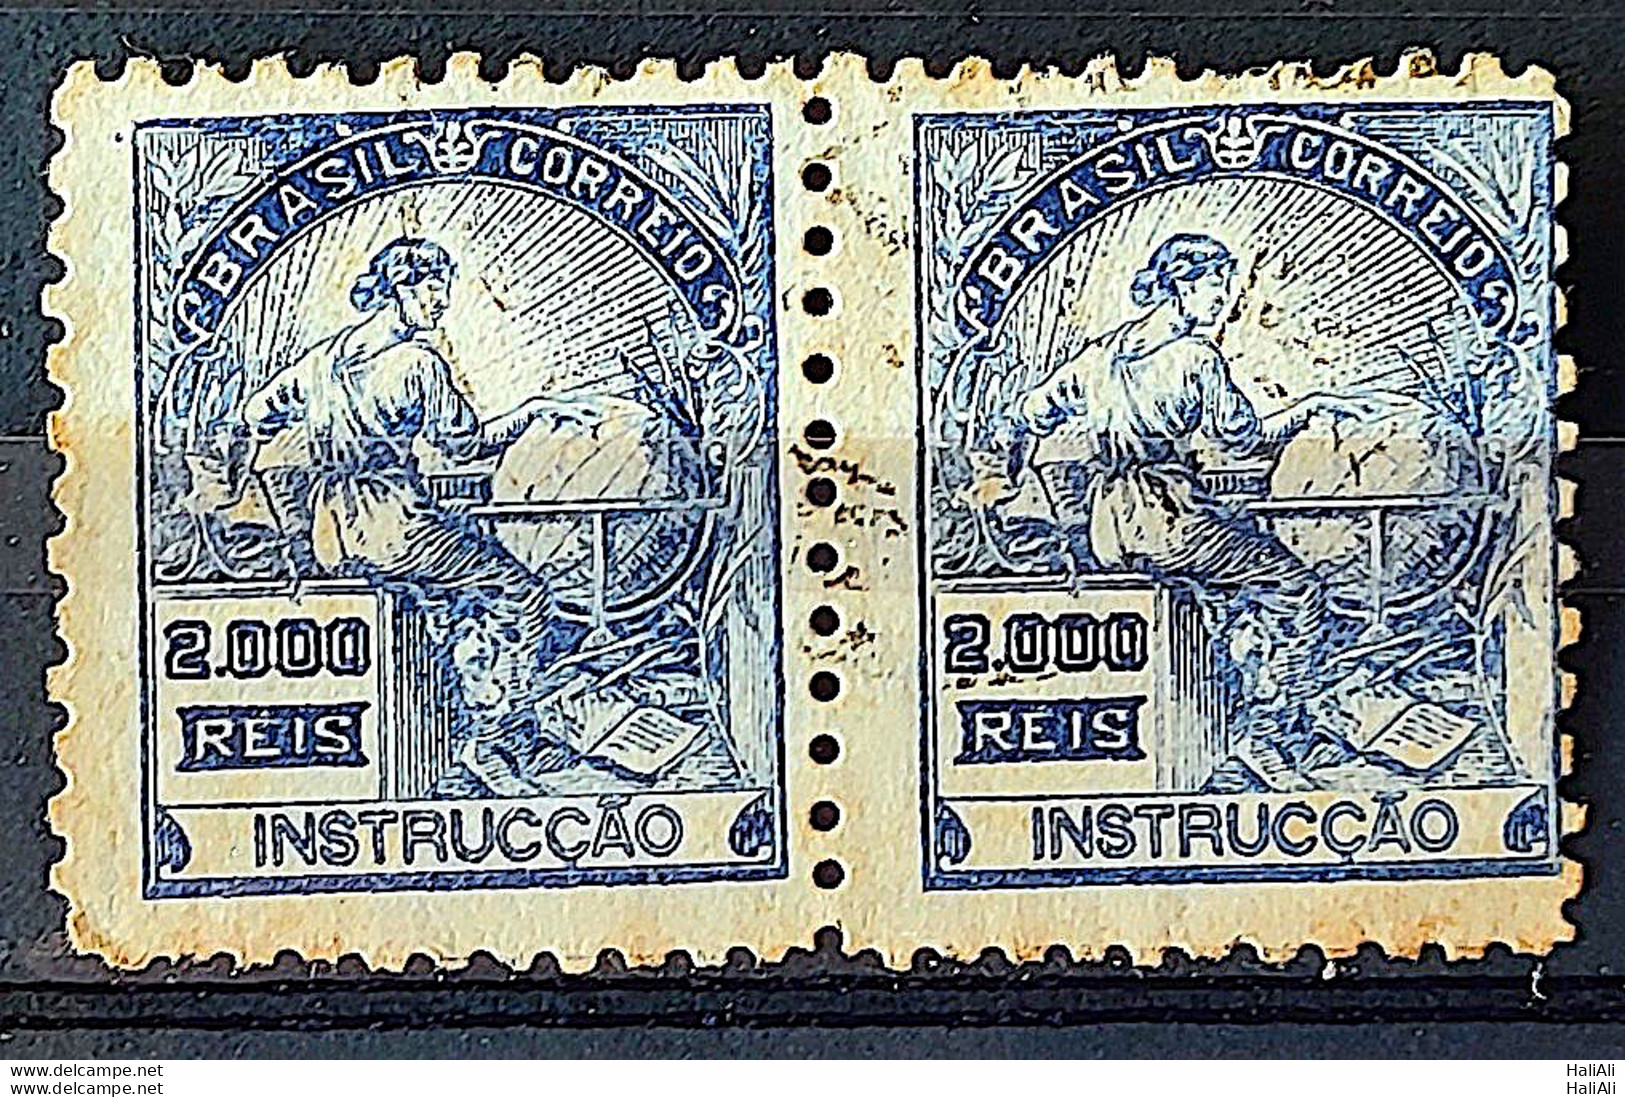 Brazil Regular Stamp Cod Rhm 308 Grandma Instruction 2000 Reis Filigree N 1936 Pair Circulated 2 - Usati